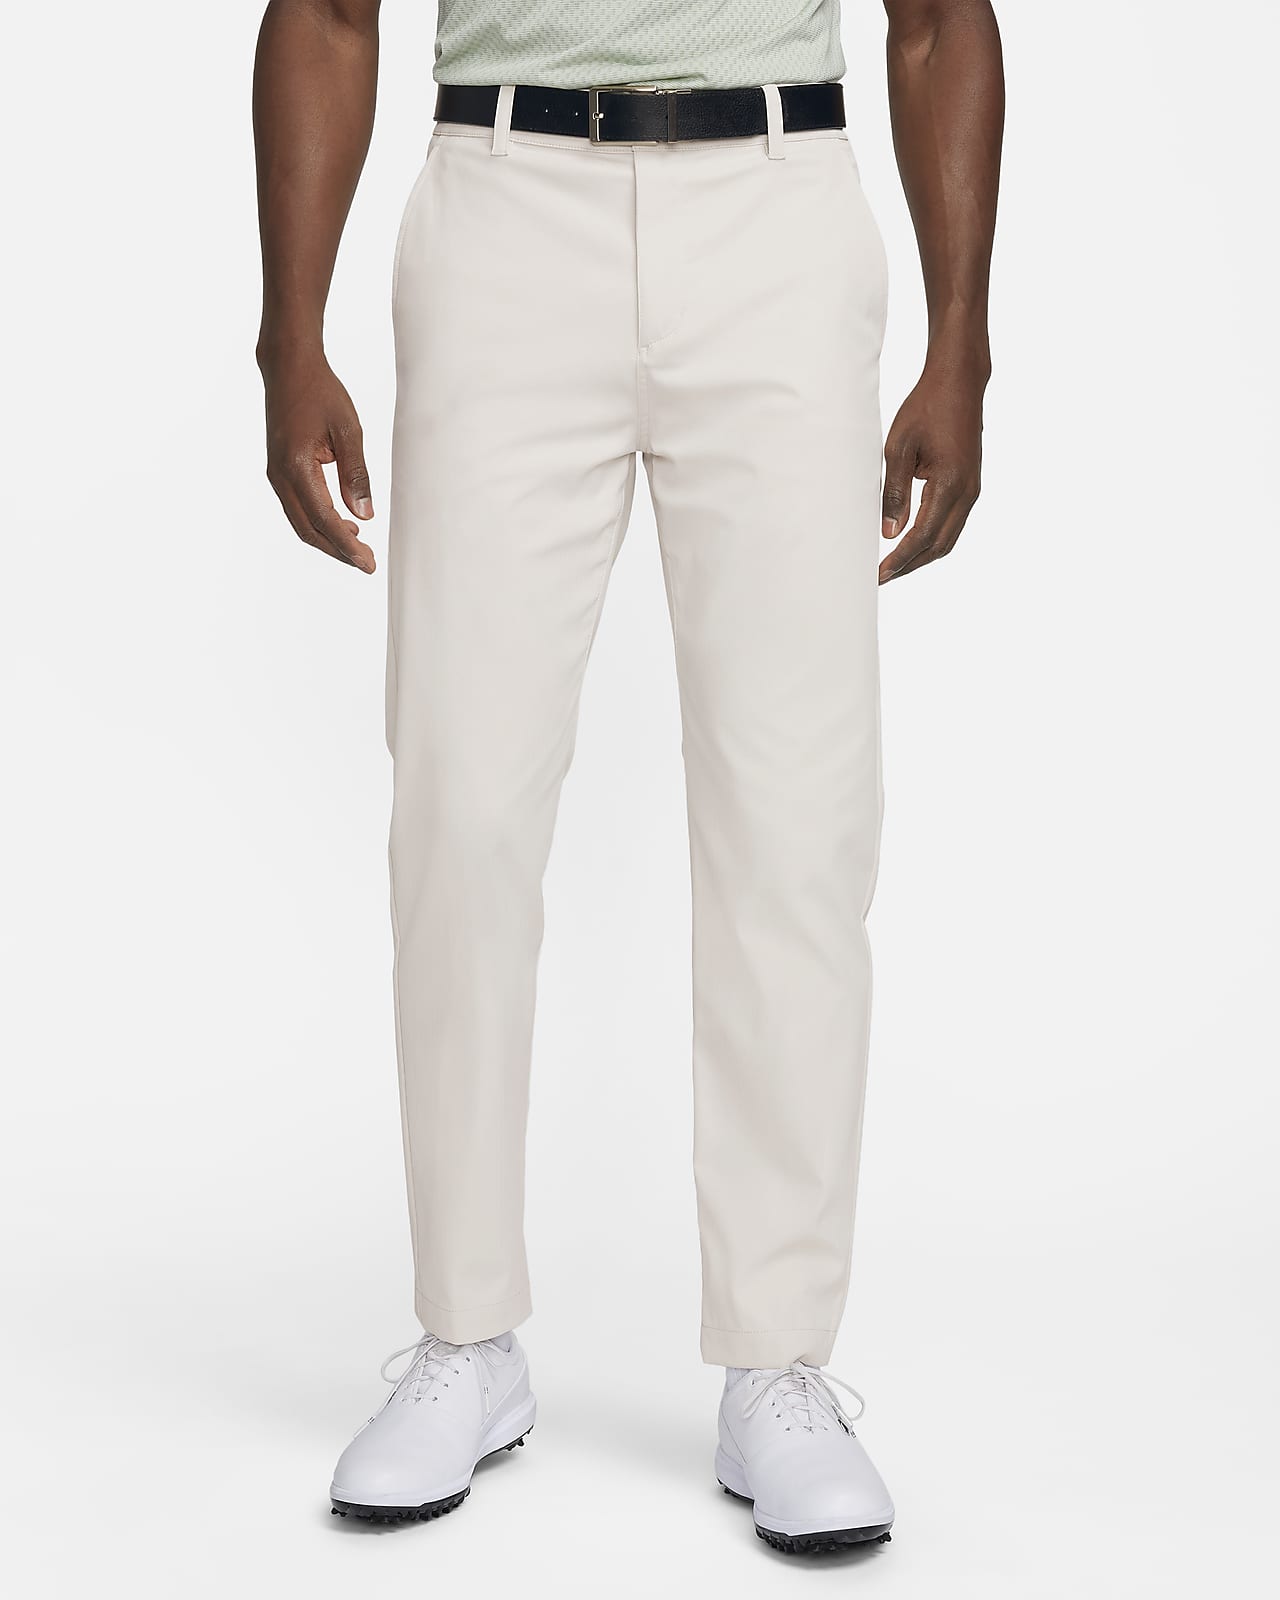 Nike Tour Repel Men's Chino Slim Golf Trousers